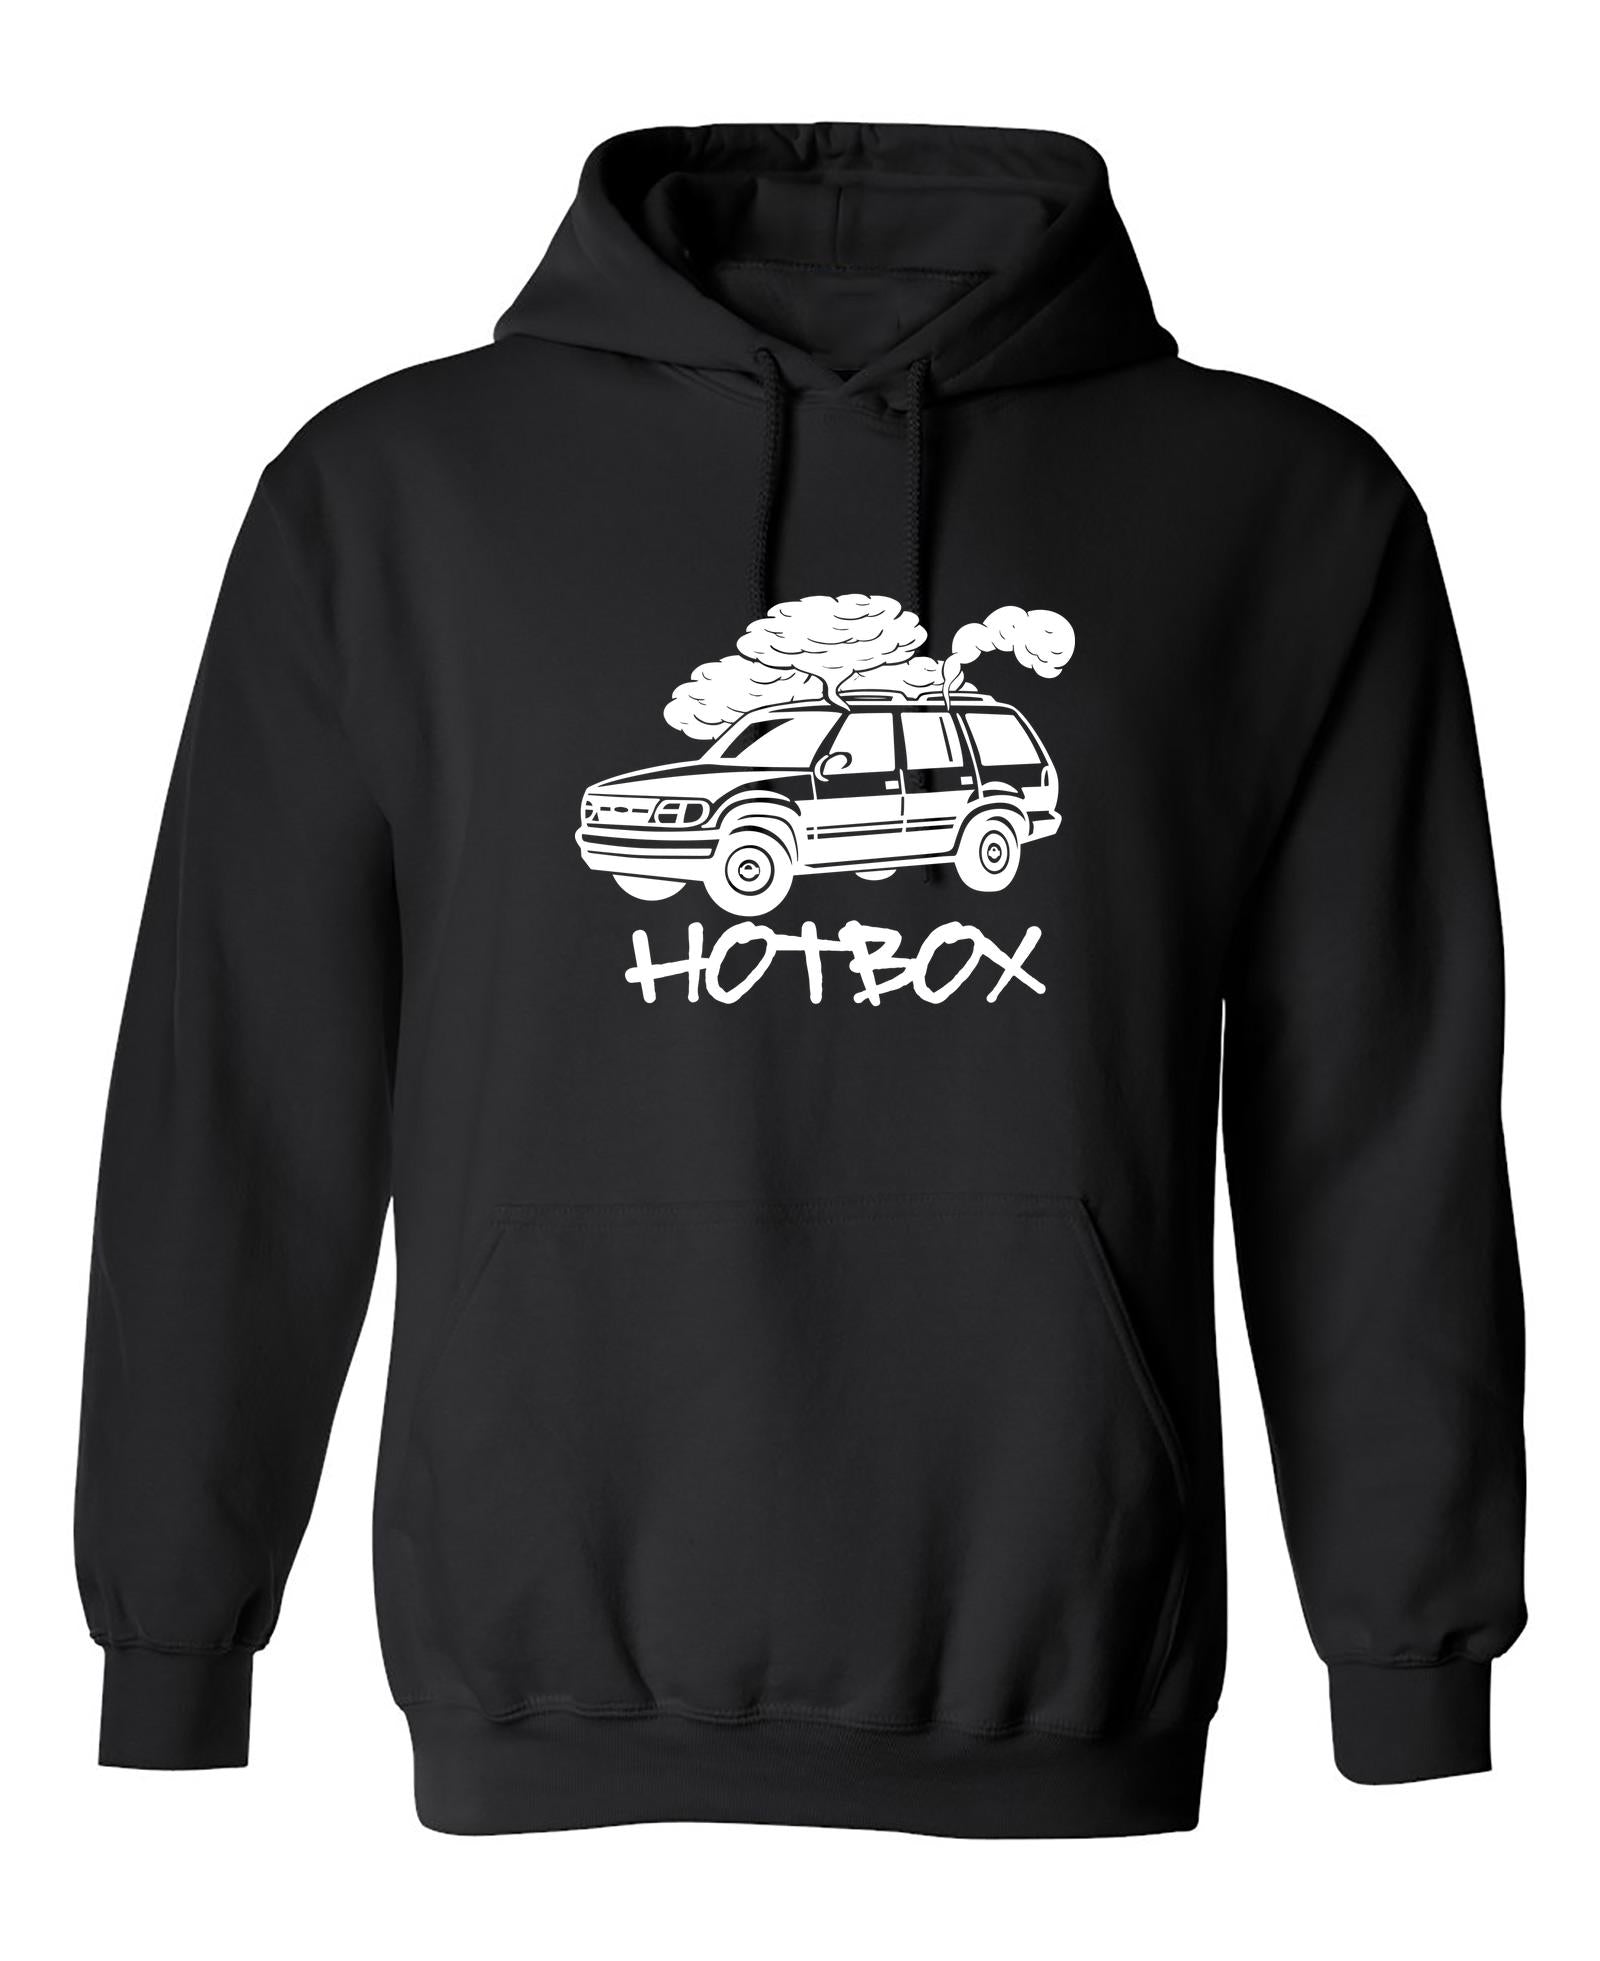 Funny T-Shirts design "Hot Box"